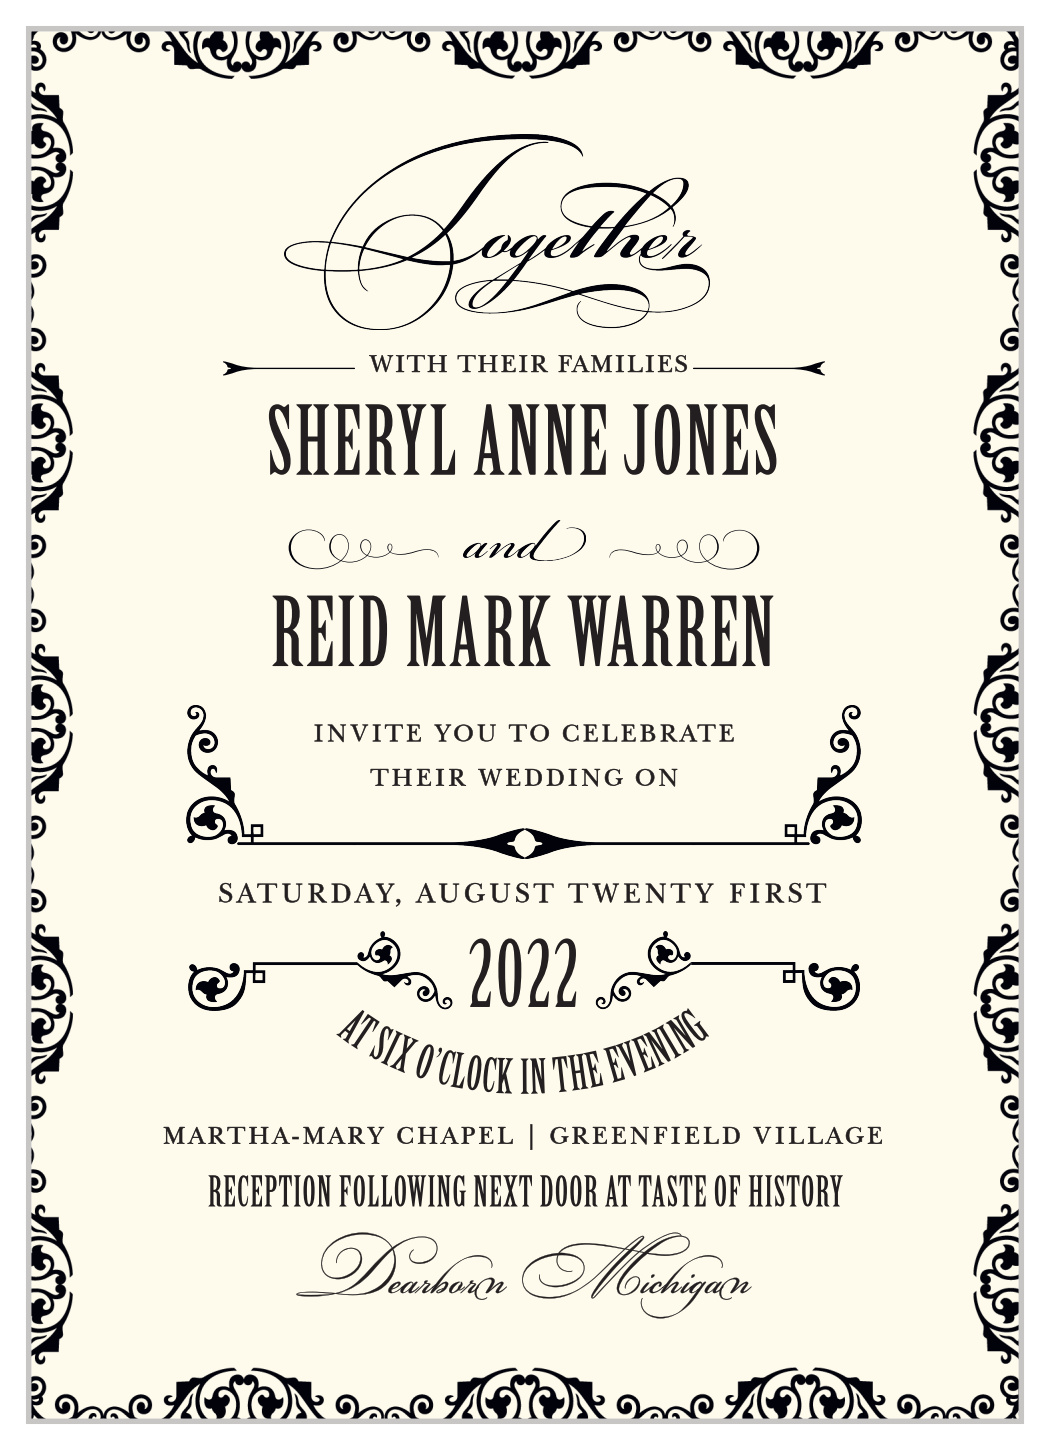 MaeMae's Ronnie Wedding Invitations